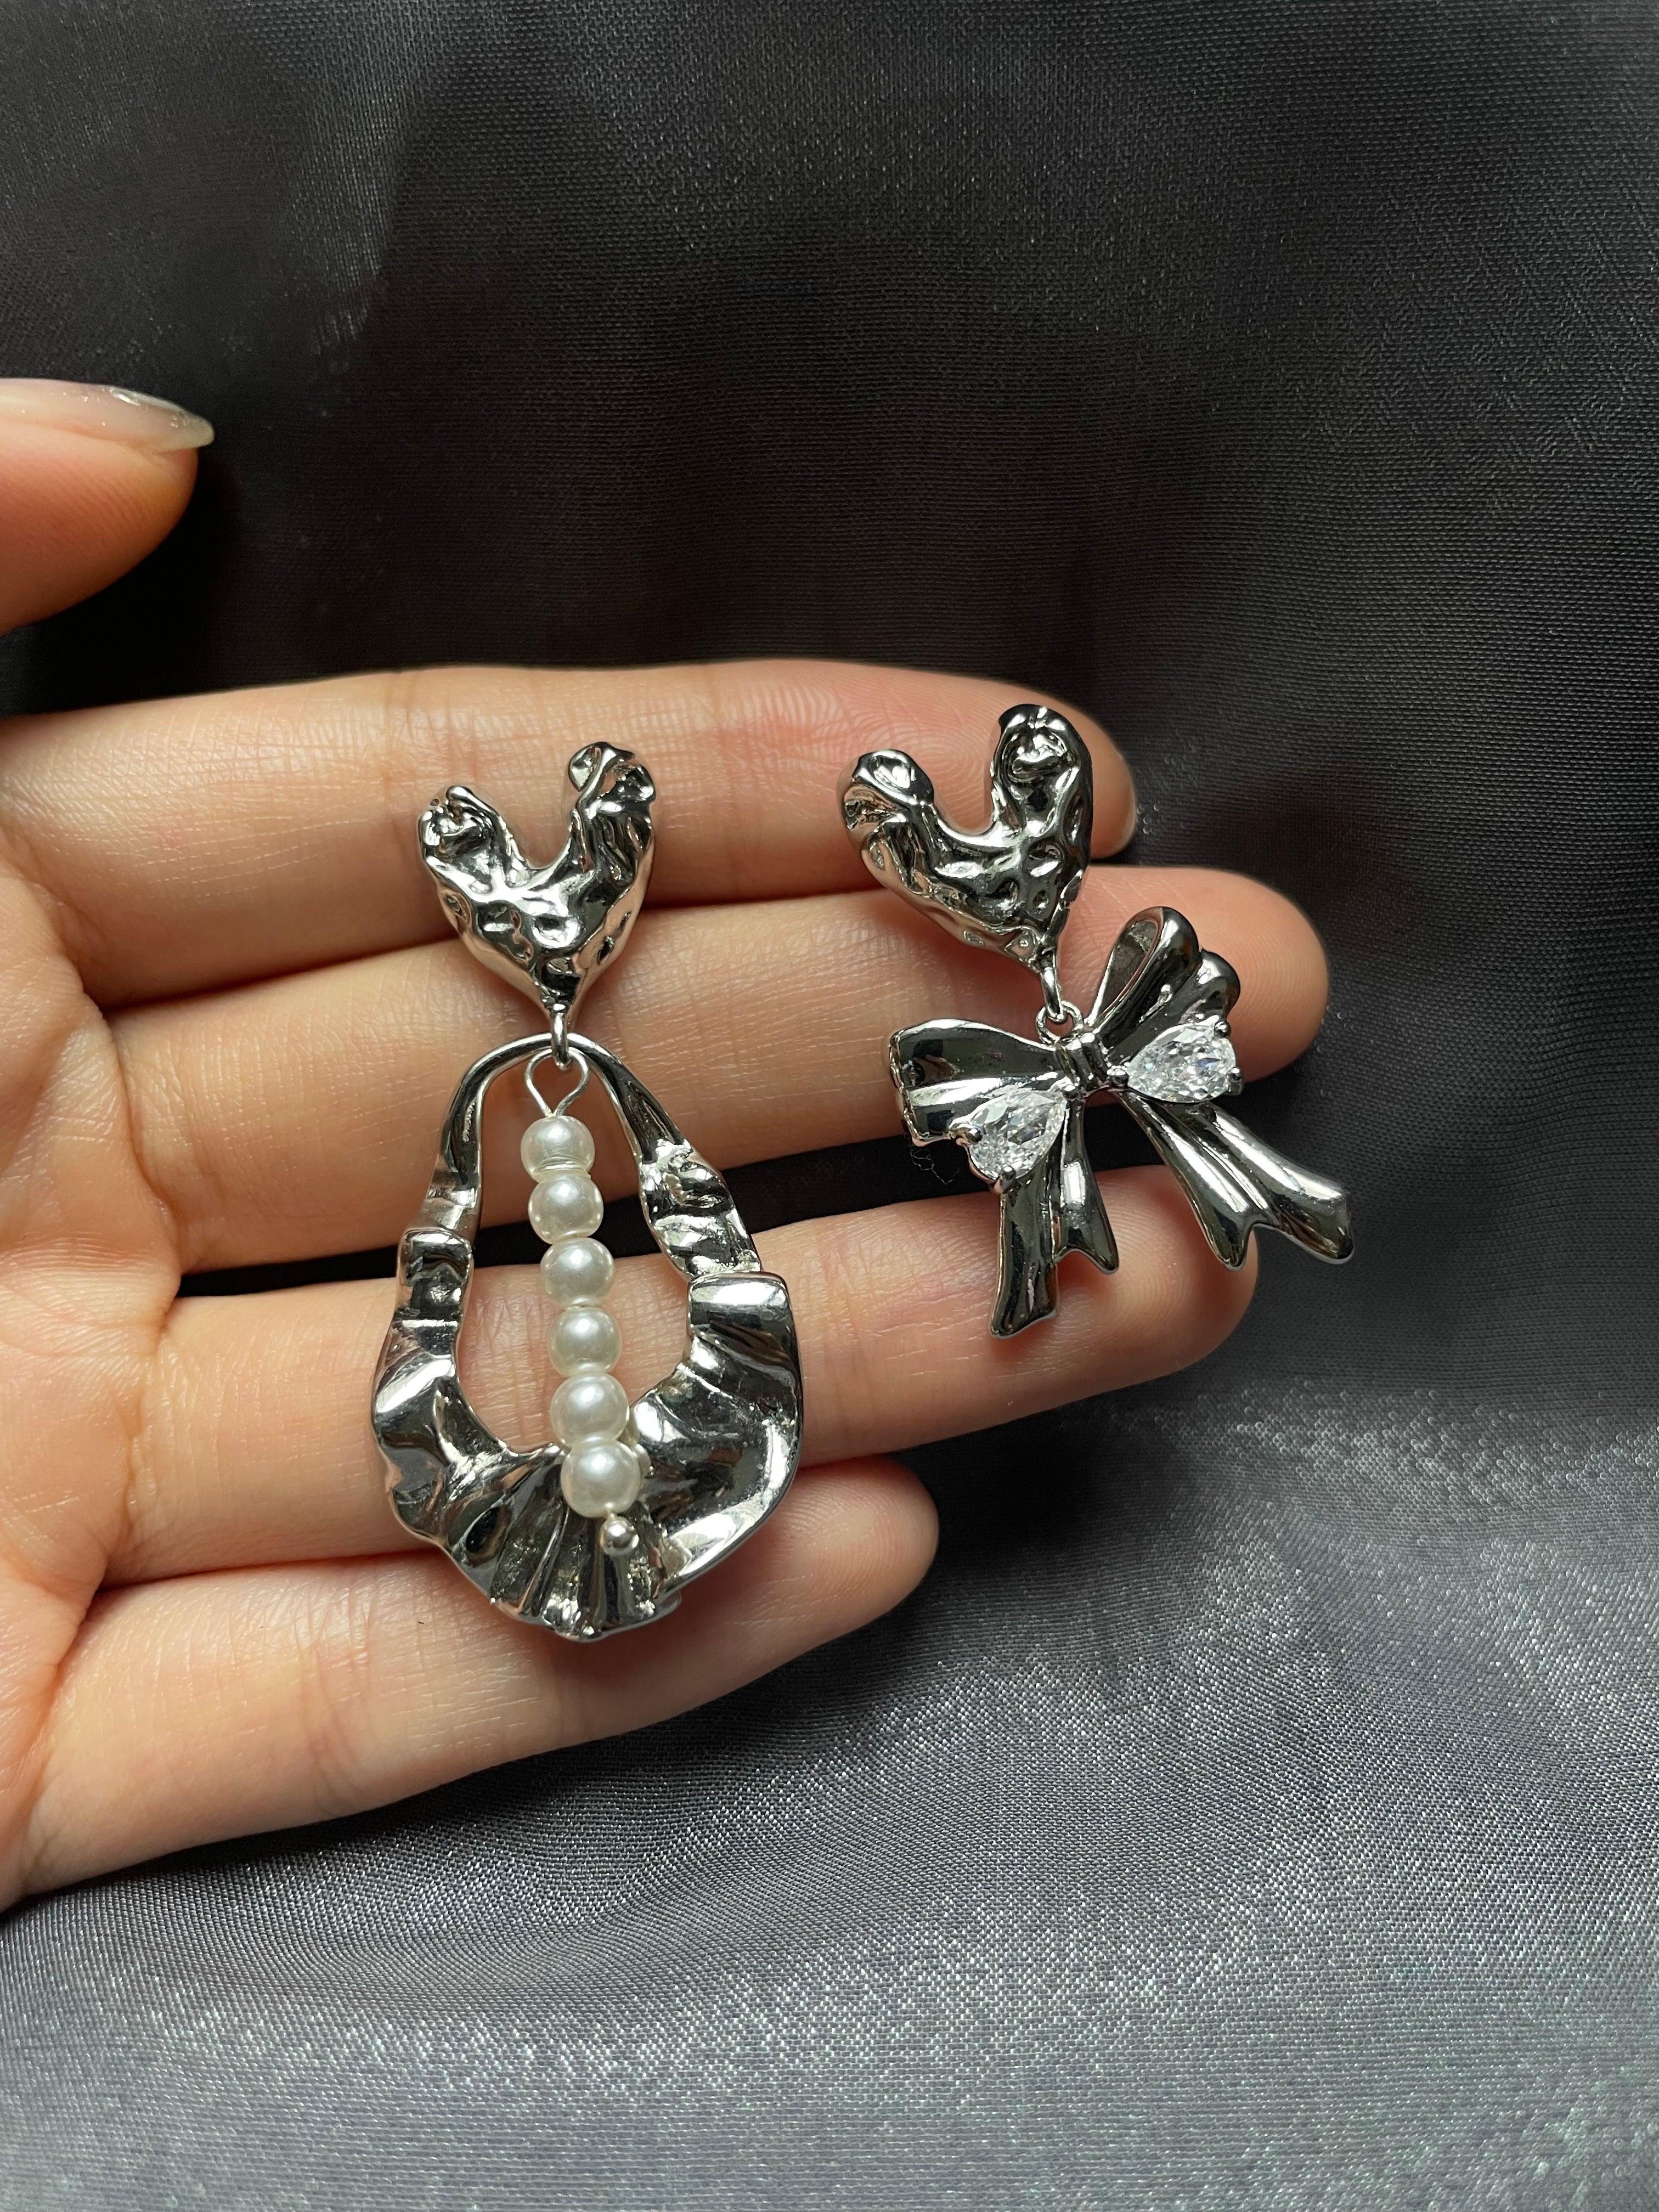 Original Design Textured Silver 925 Asymmetrical Handmade Earrings